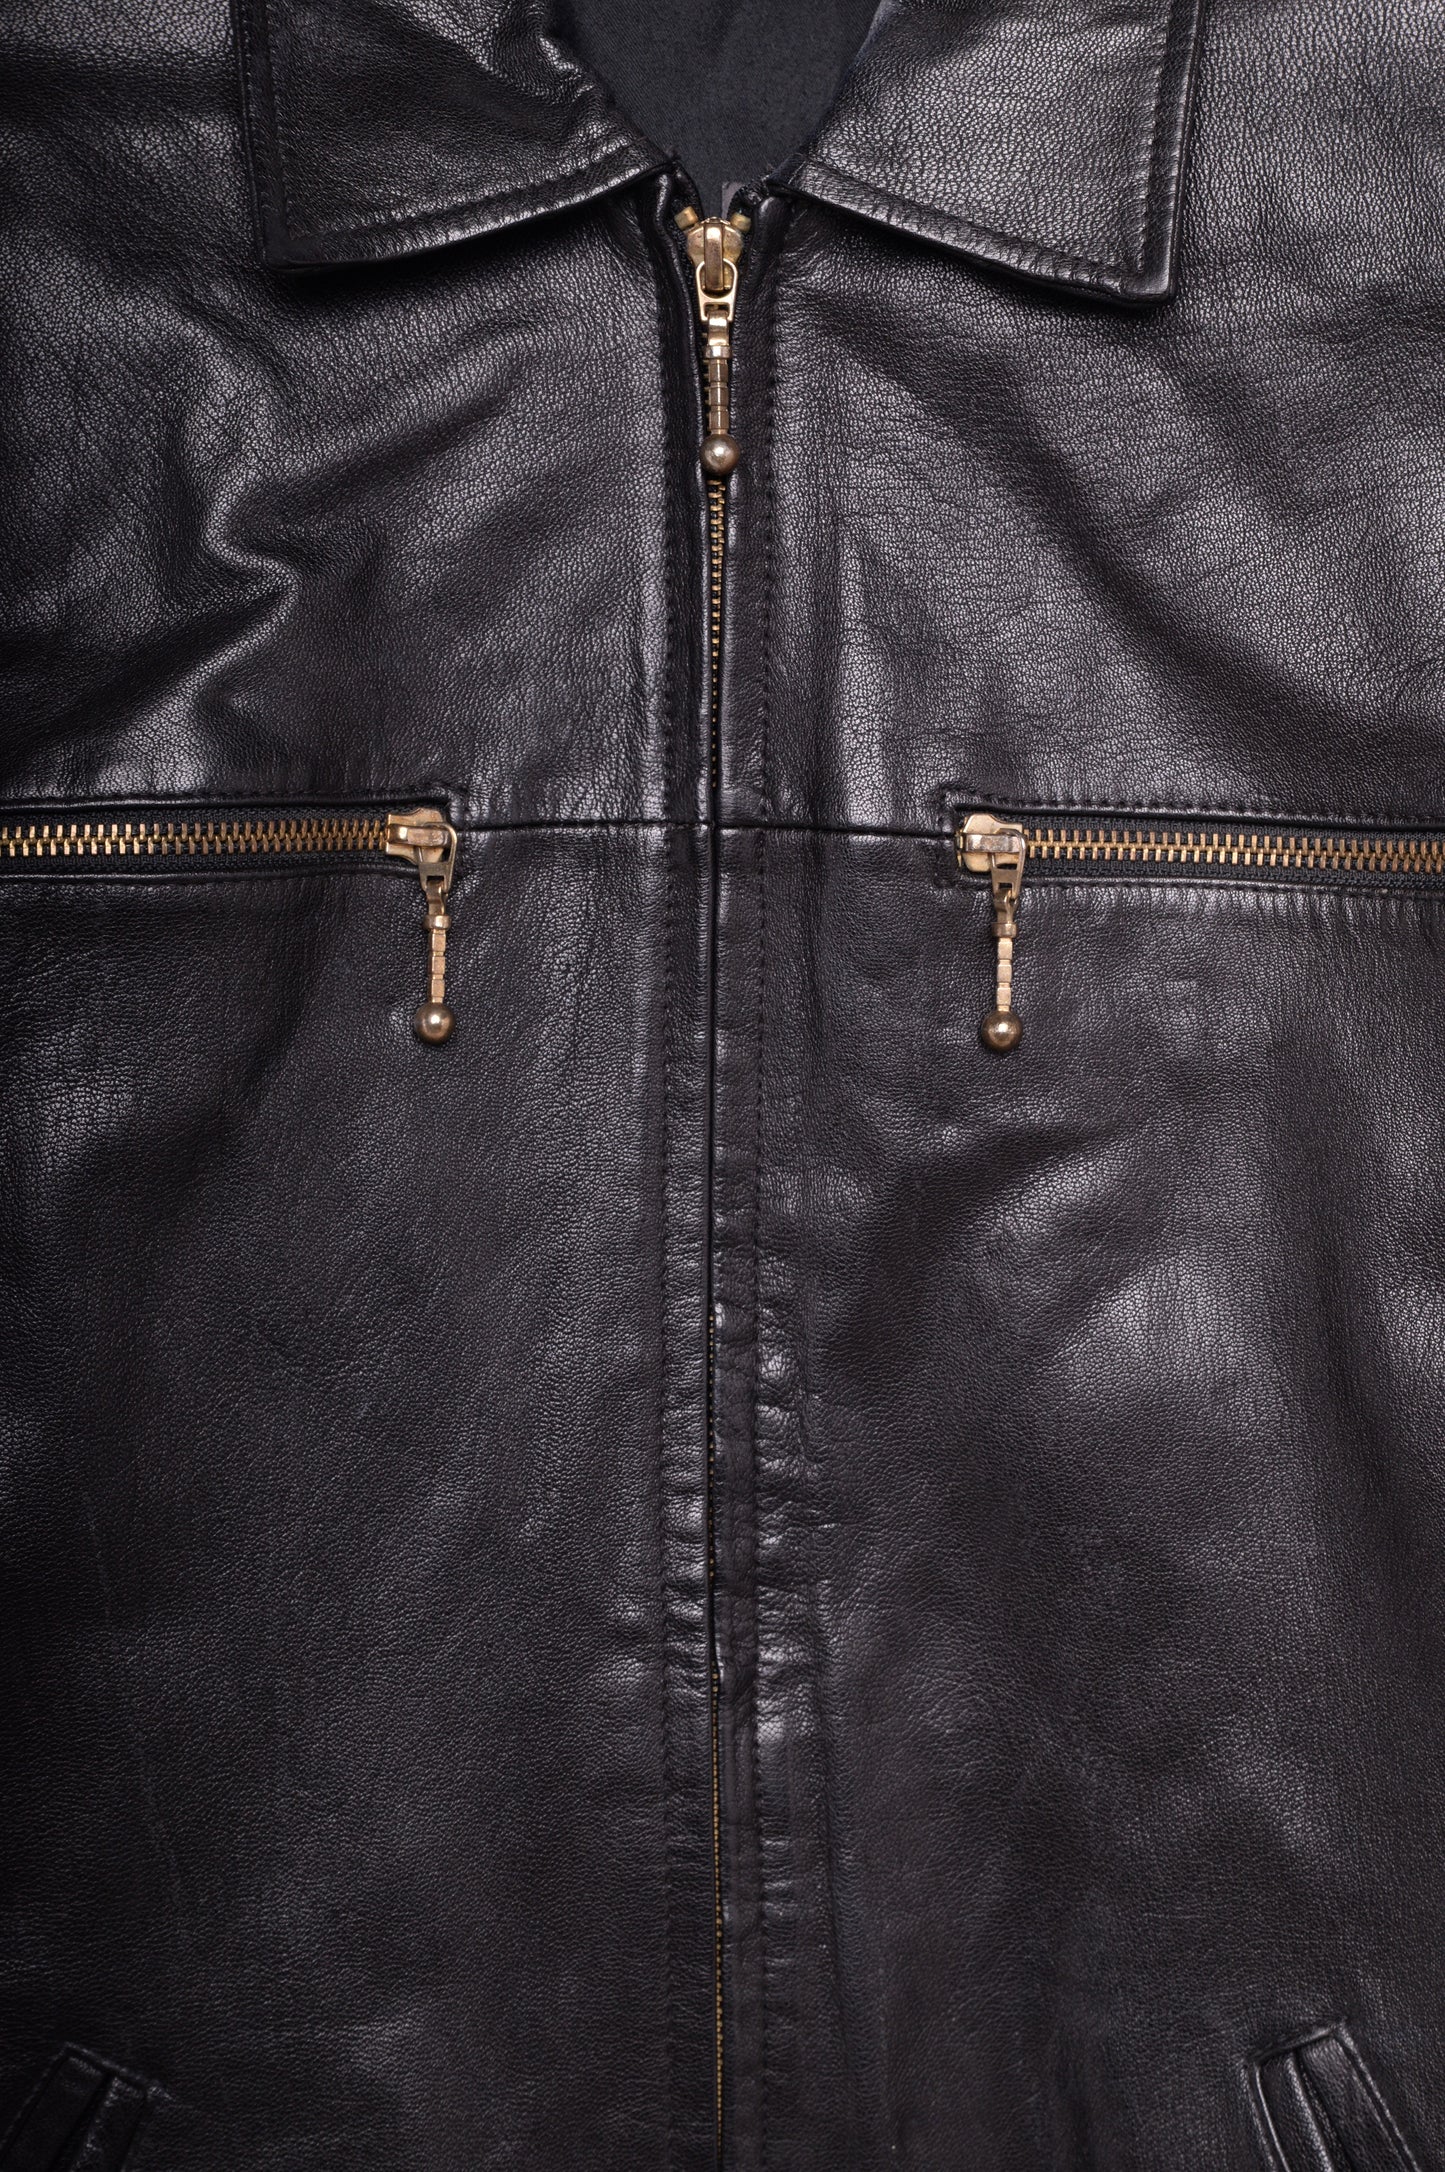 Zip-Up Leather Jacket